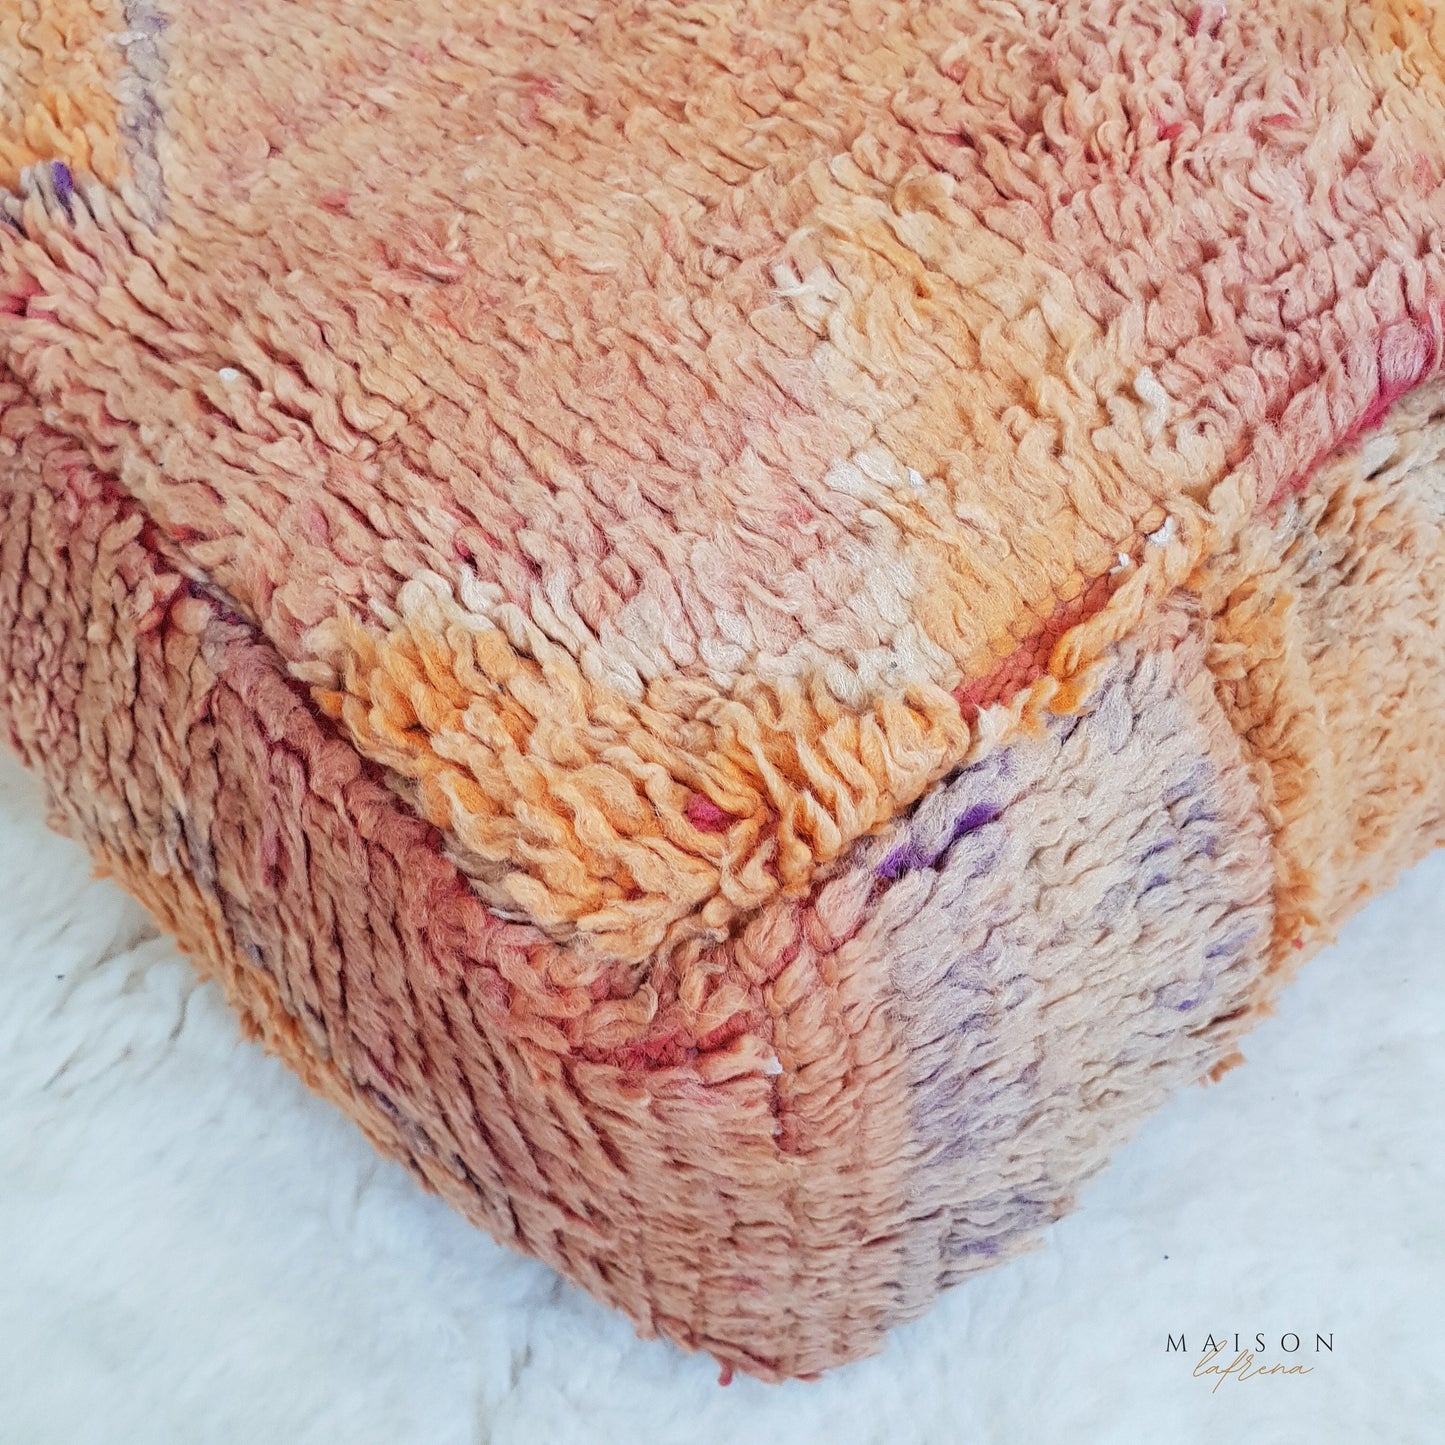 Moroccan Kilim Pouf - Berber Floor Cushion Cover